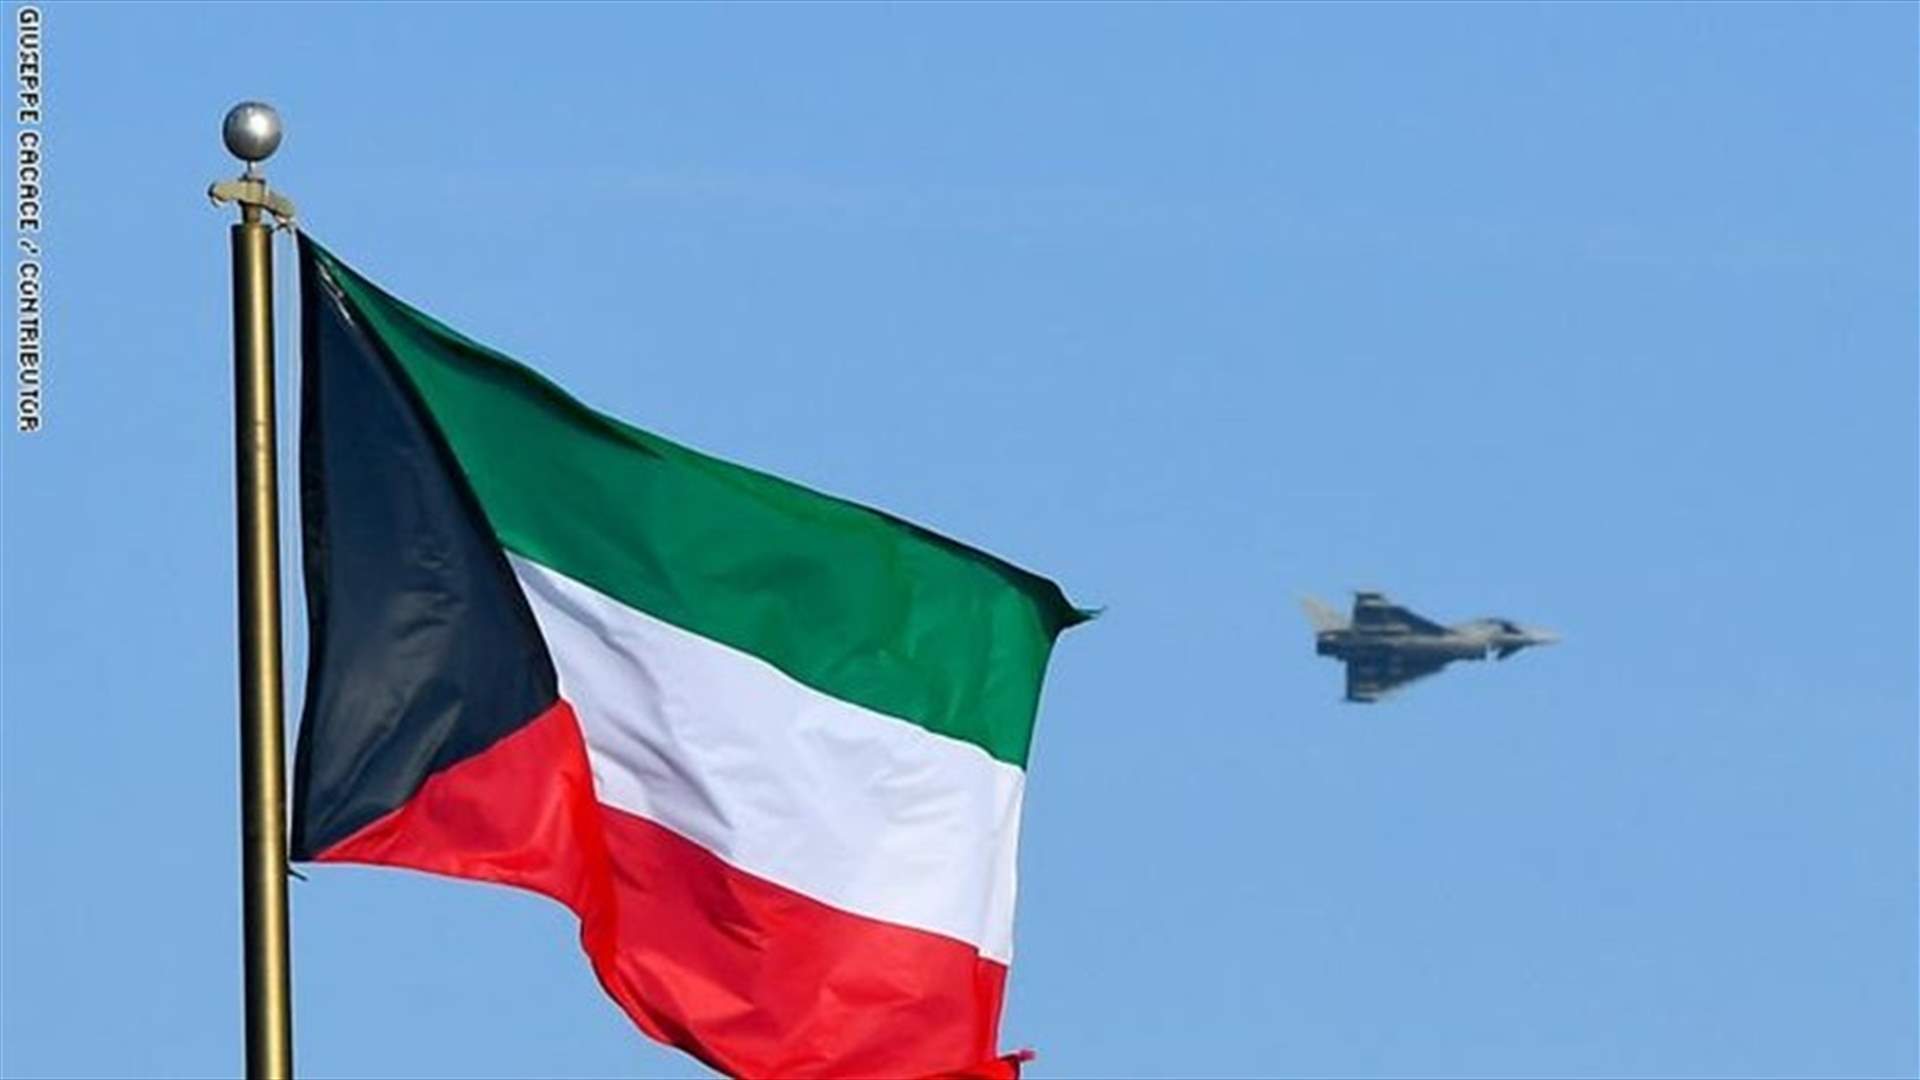 Kuwait says it&#39;s probing drone sighting, working with Riyadh